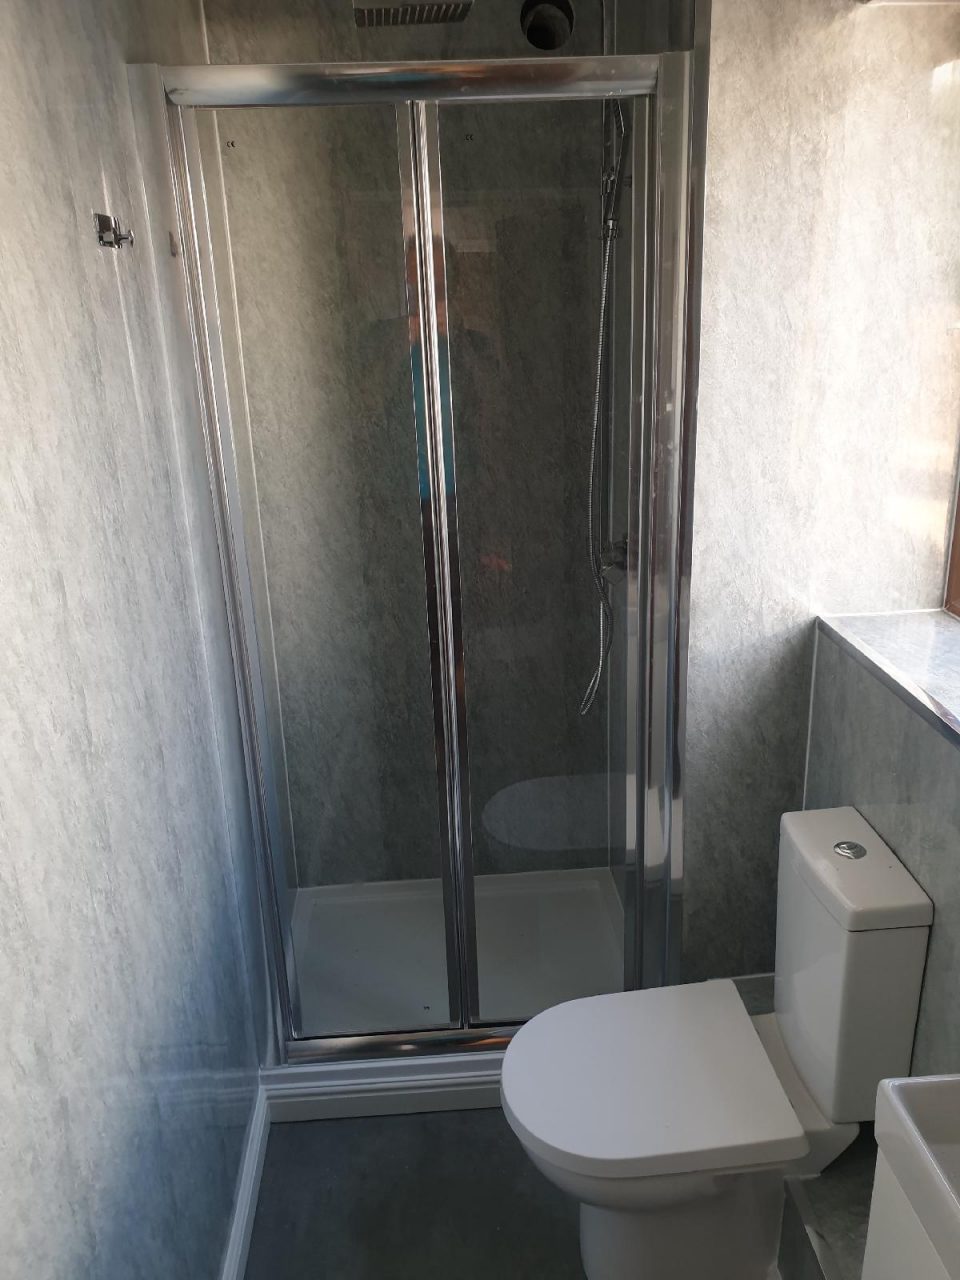 New Bathroom Mrs Wootton in Birmingham Guest Cloak Room Ensuite with Shower